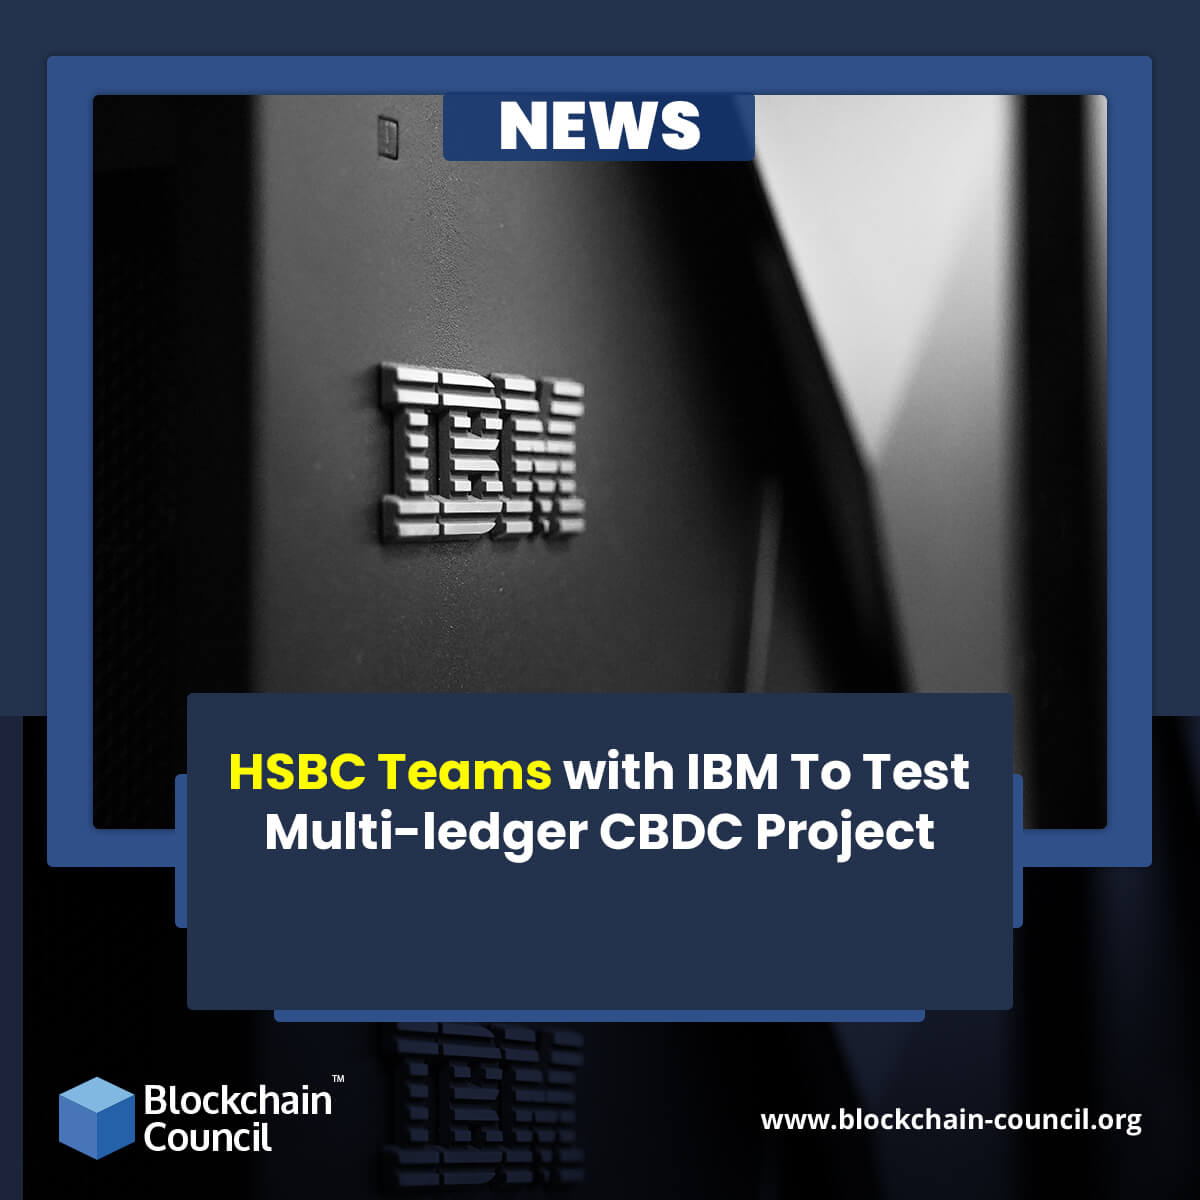 HSBC Teams with IBM To Test Multi-ledger CBDC Project